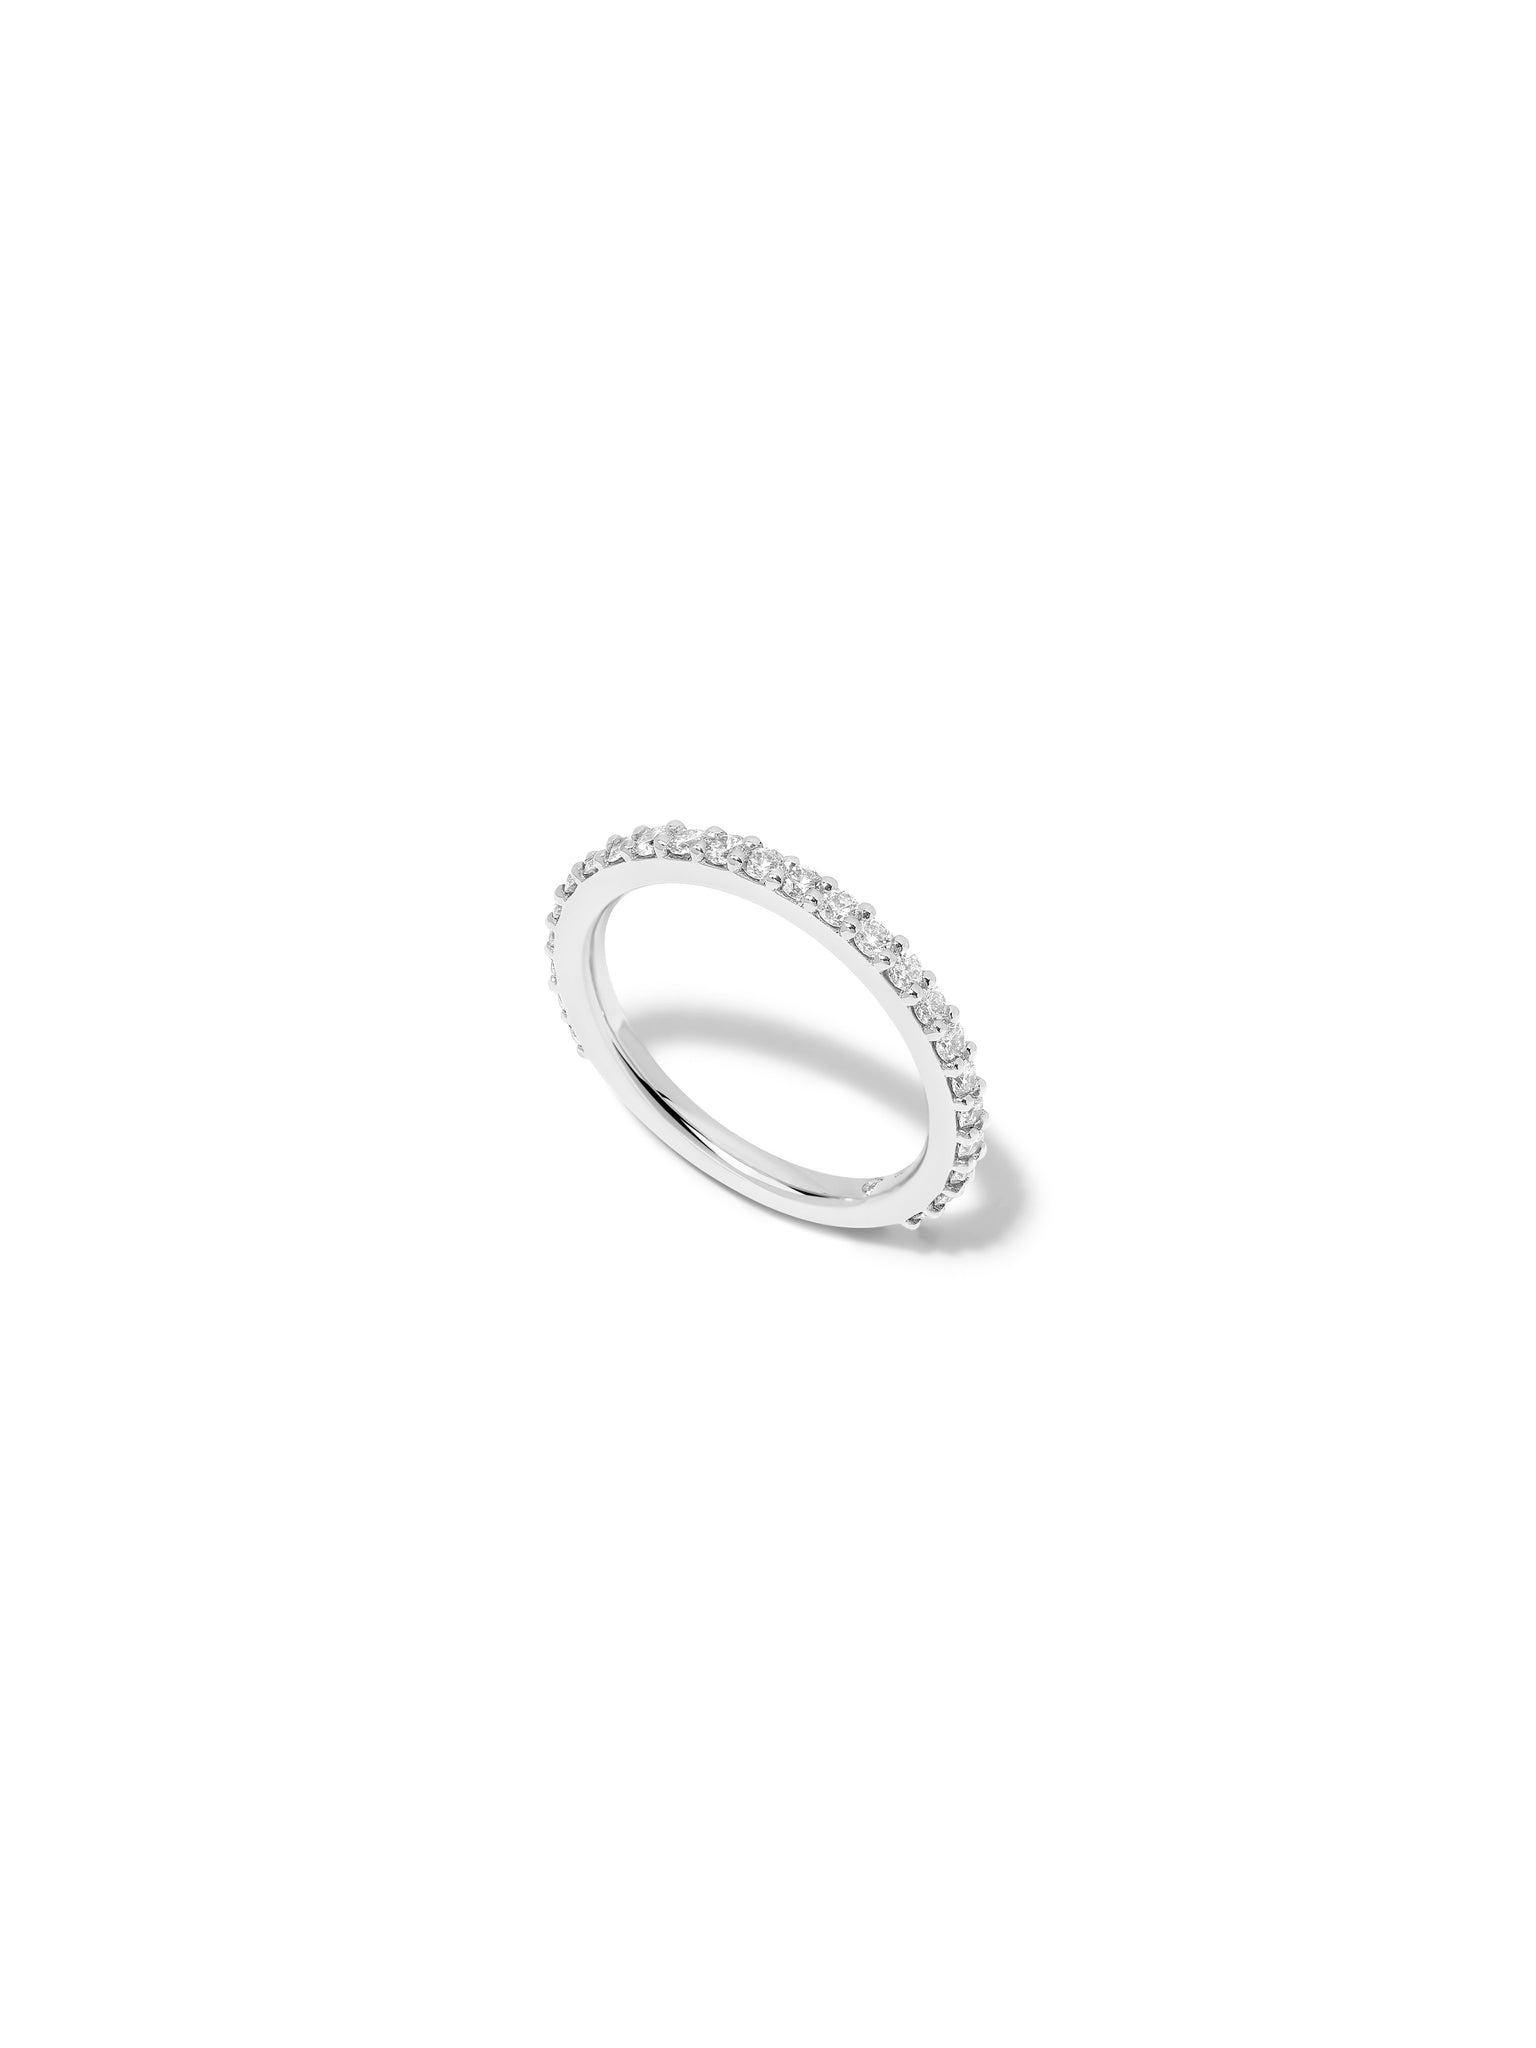 Chelsea Petite Eternity Ring